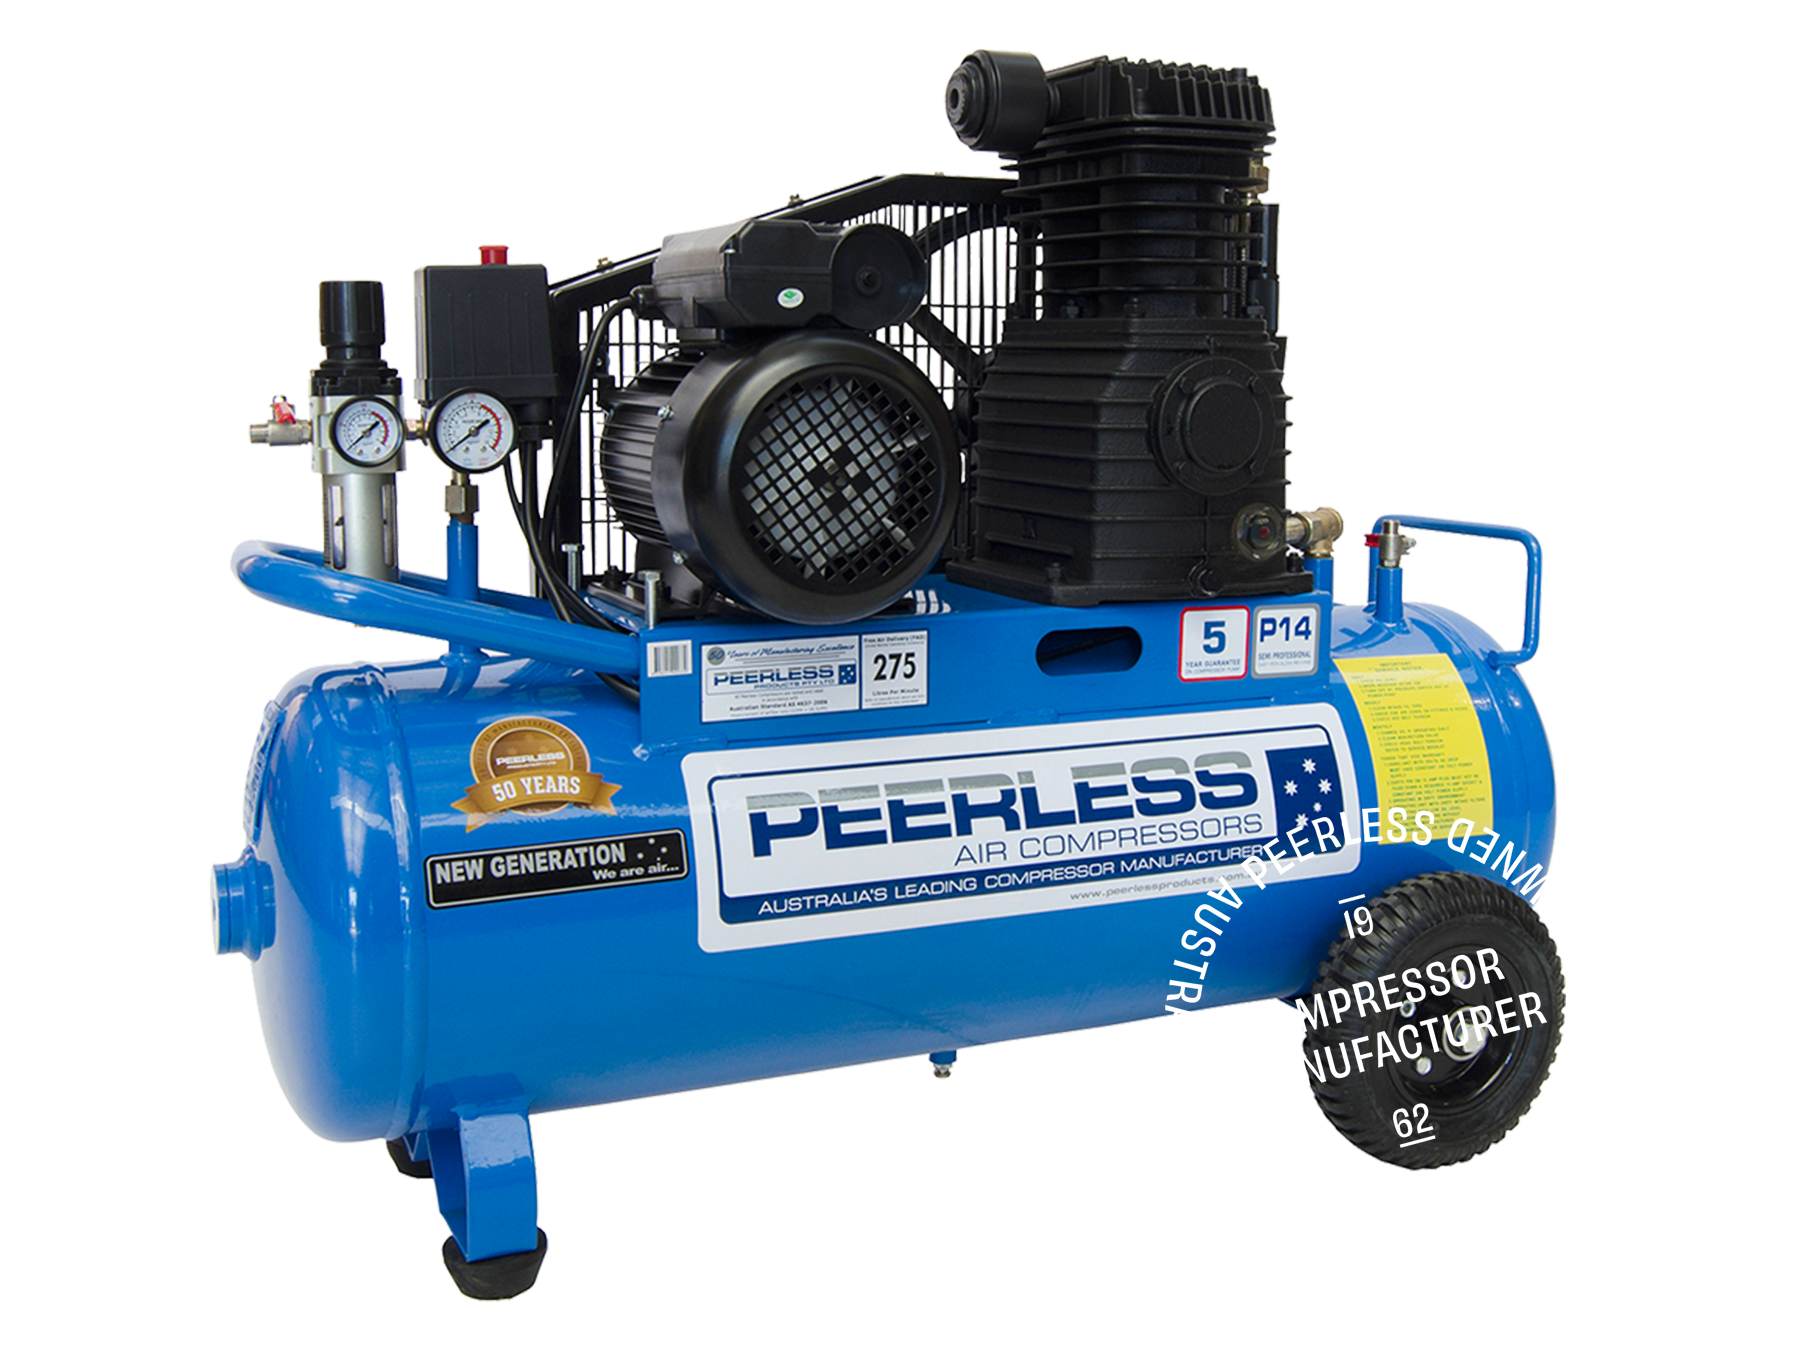 P14 Single Phase Air Compressor: Belt Drive, 10Amp, 2.75HP, 275LPM